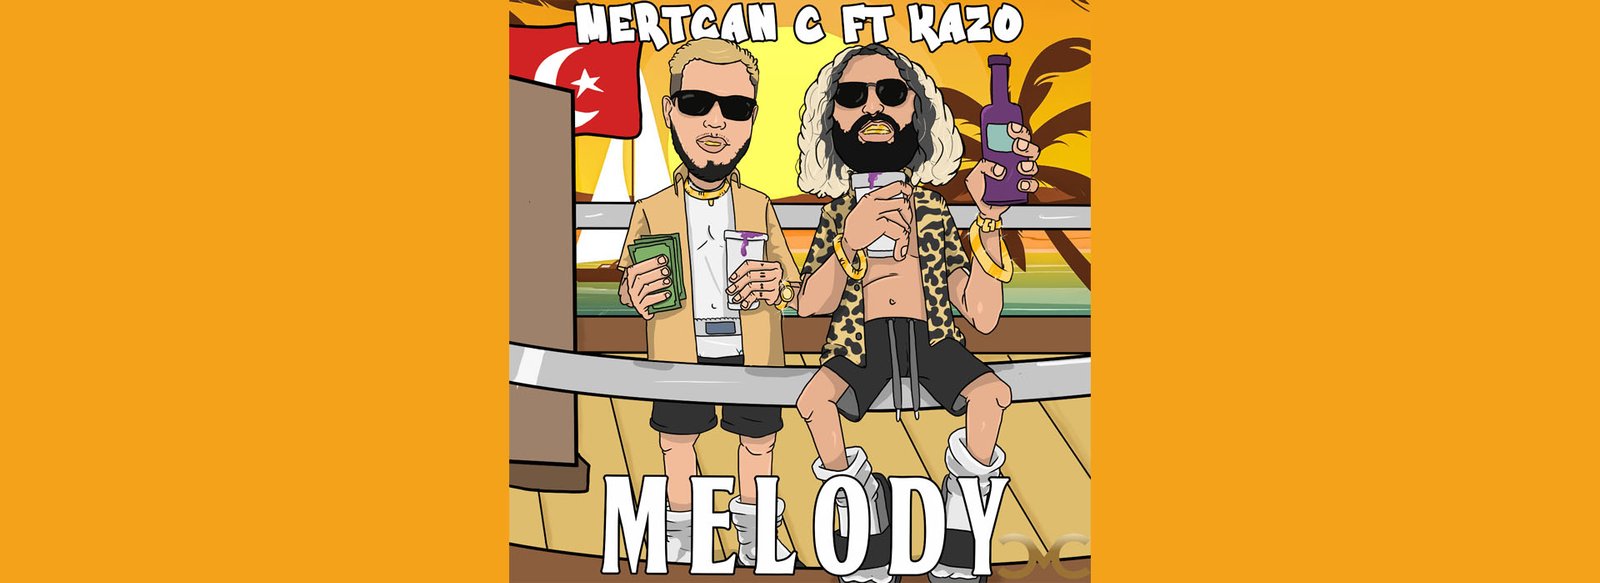 Mertcan C feat. Kazo - Melody